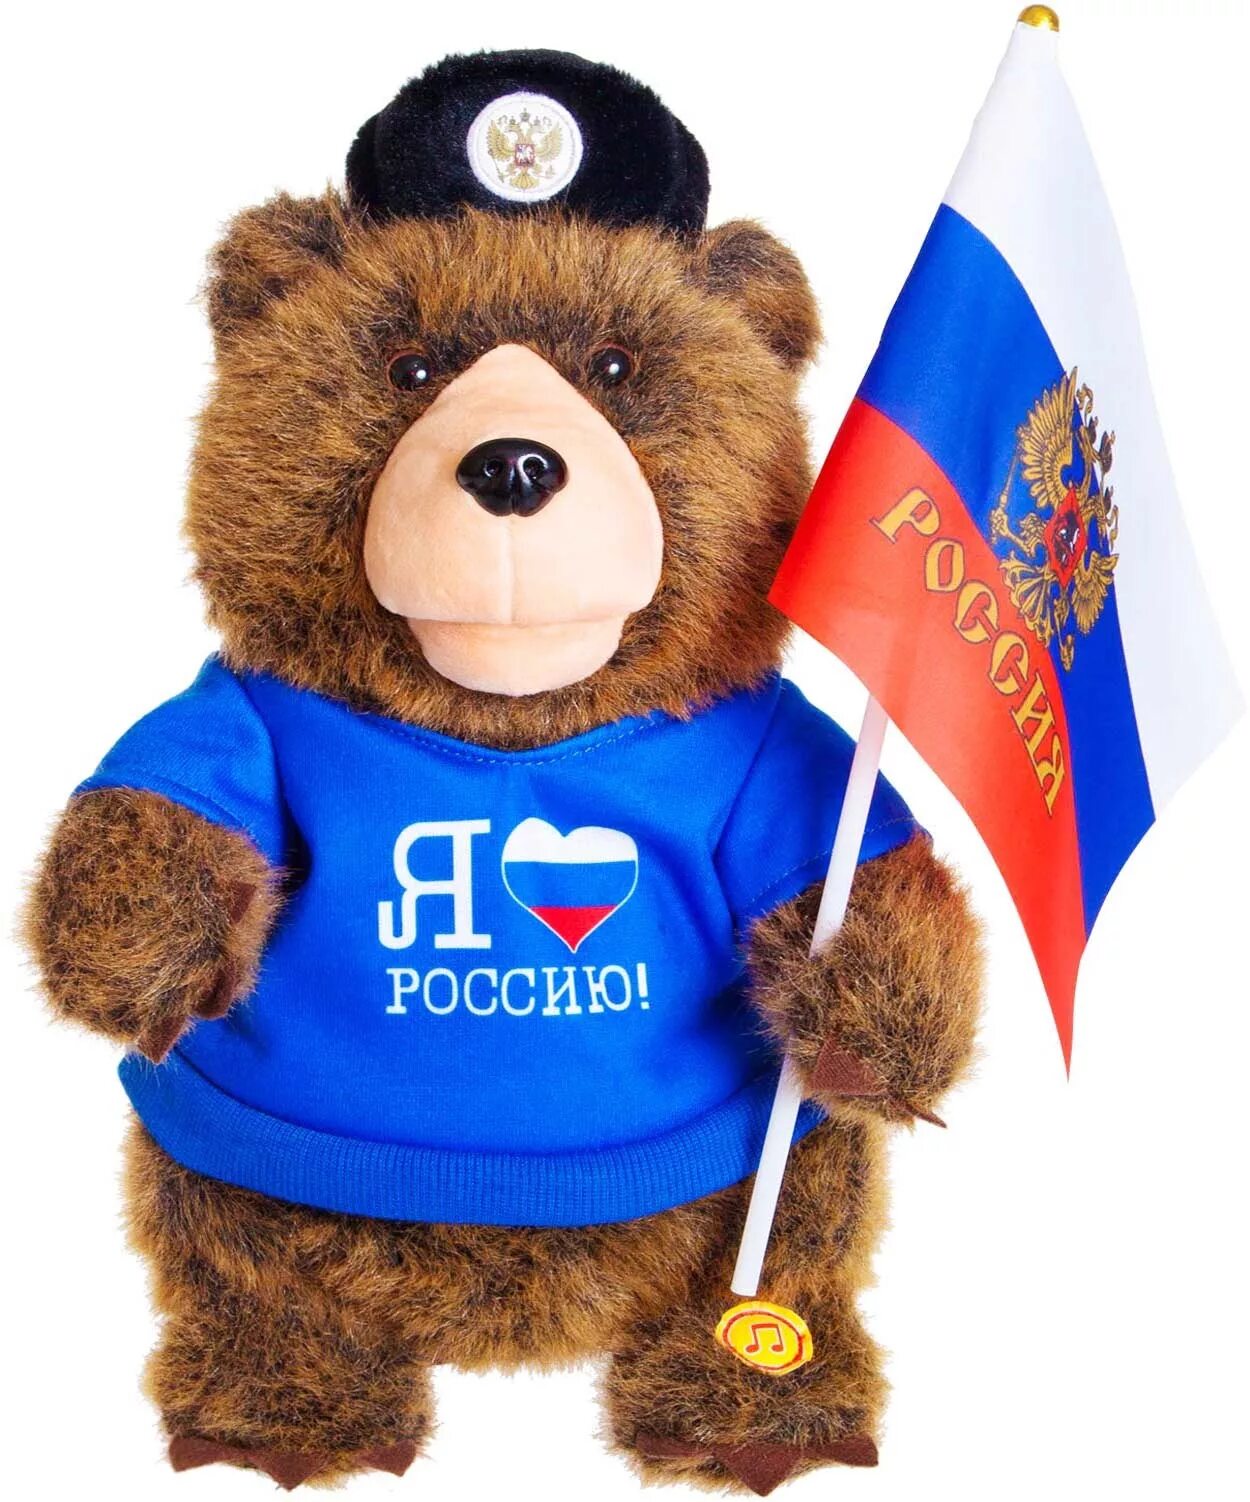 Какая игрушка символ россии. Мишка Патриот игрушка. Медведь символ России. Российский флаг игрушки. Флаг России с медведем.